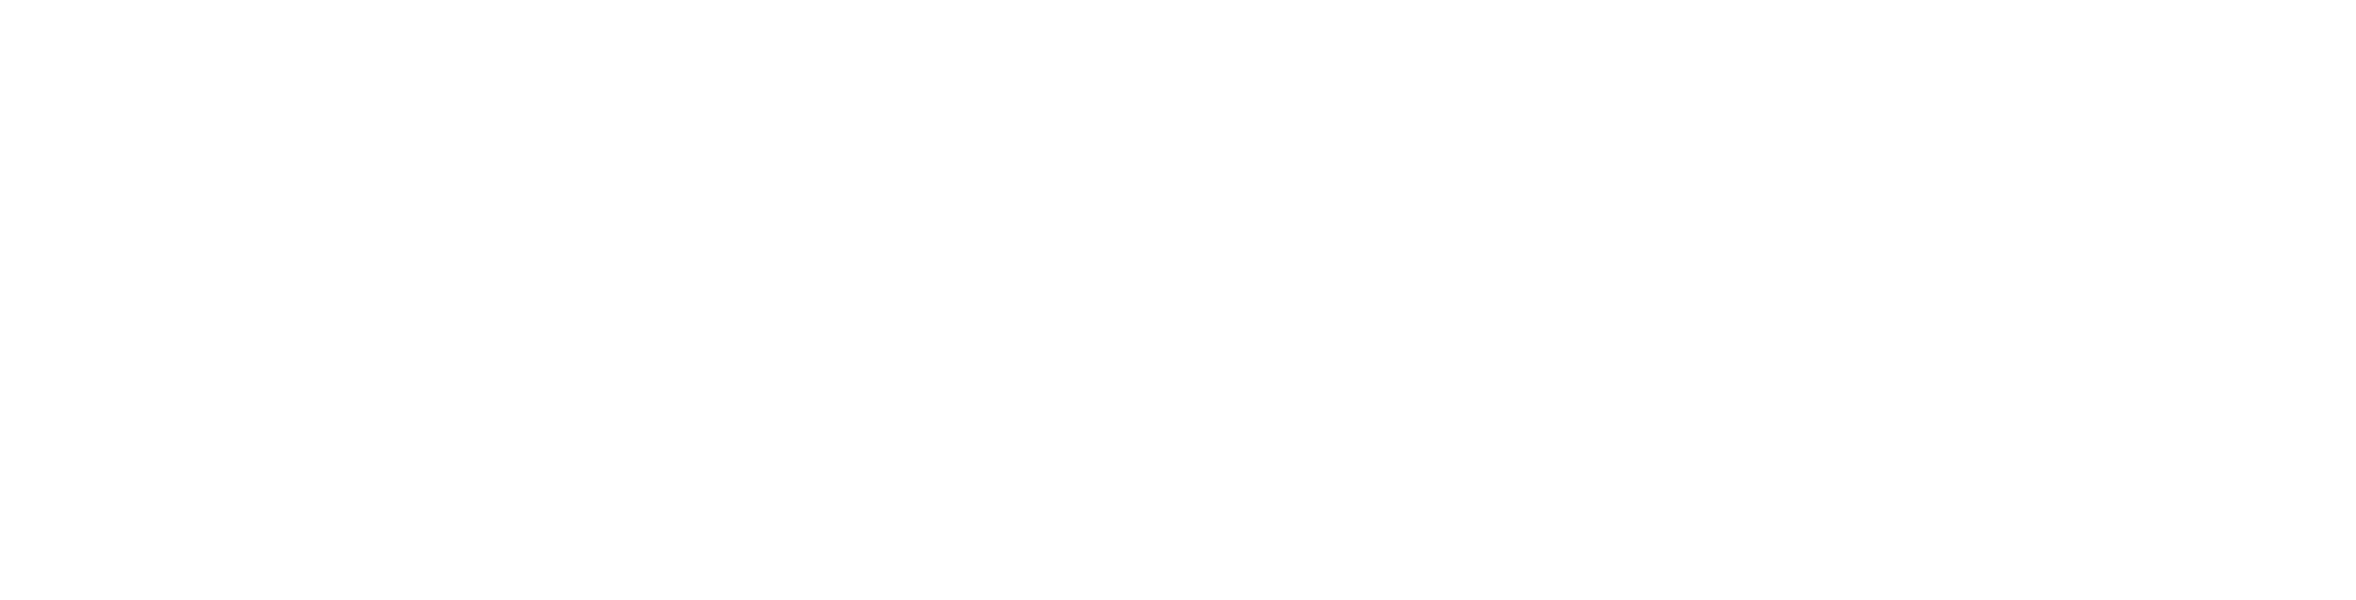 clockify_logo_white_subtract